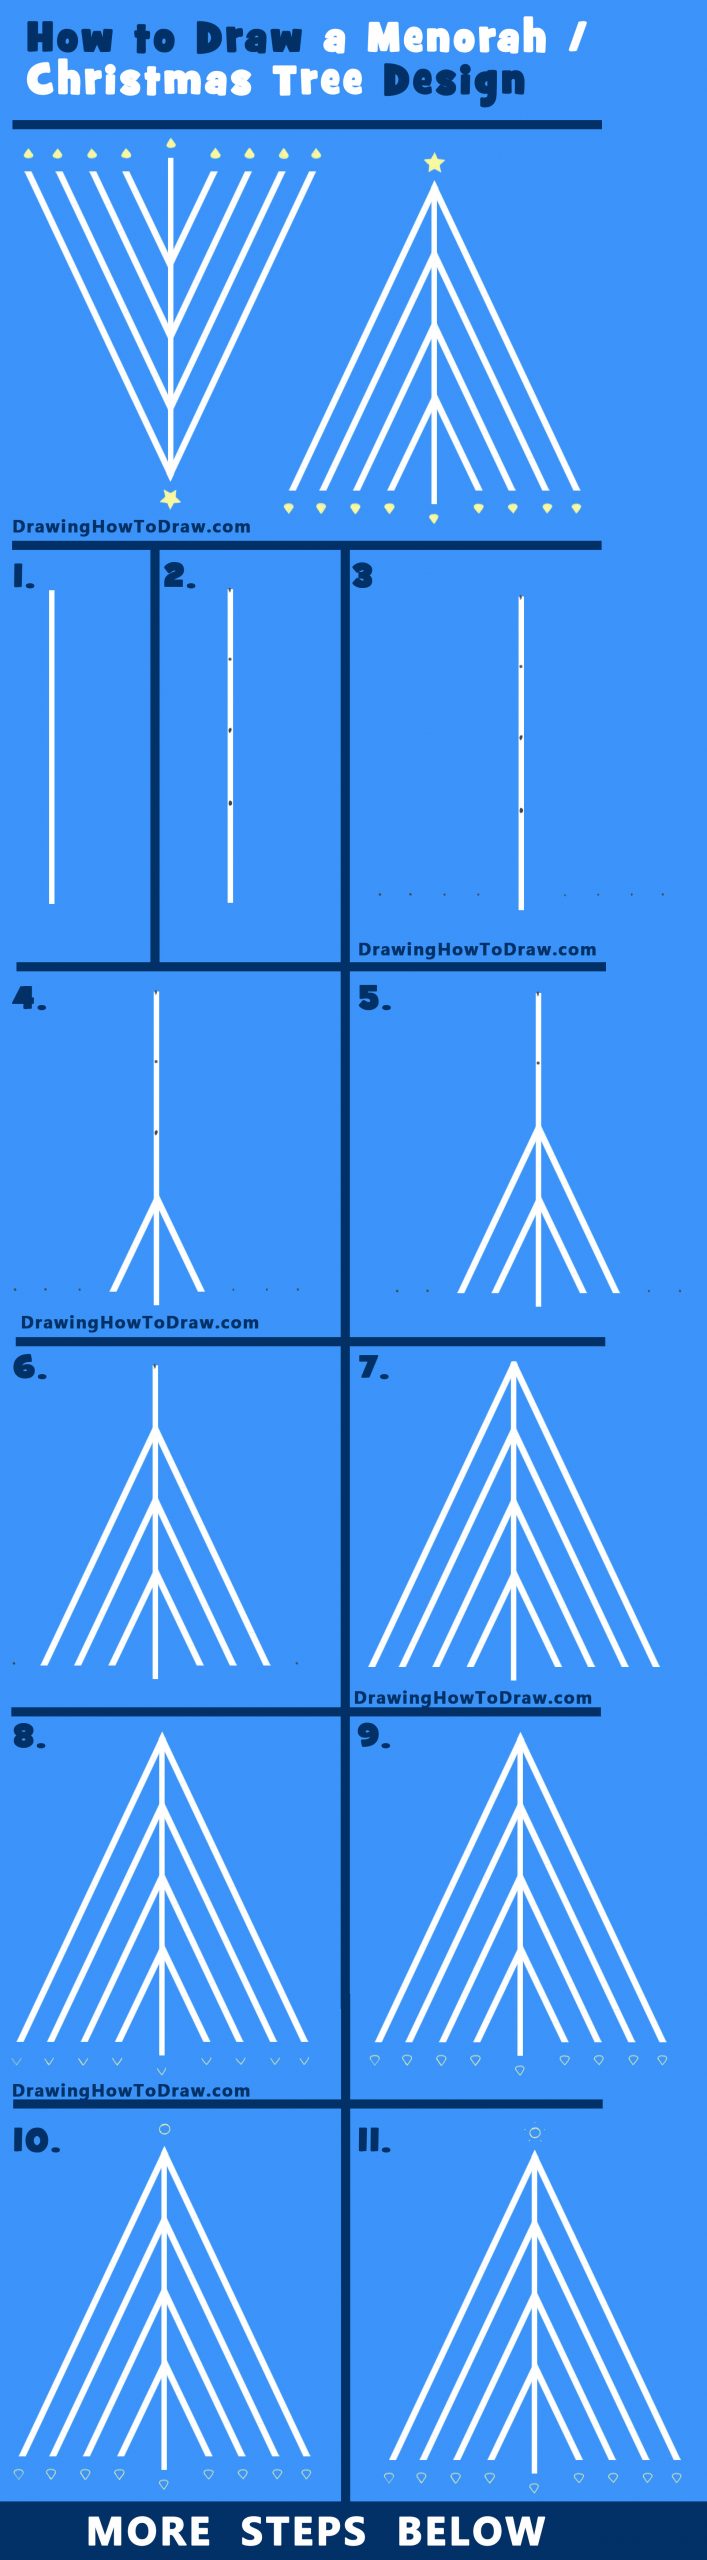 How to draw a christmas tree hanukkah meorah greeting card design